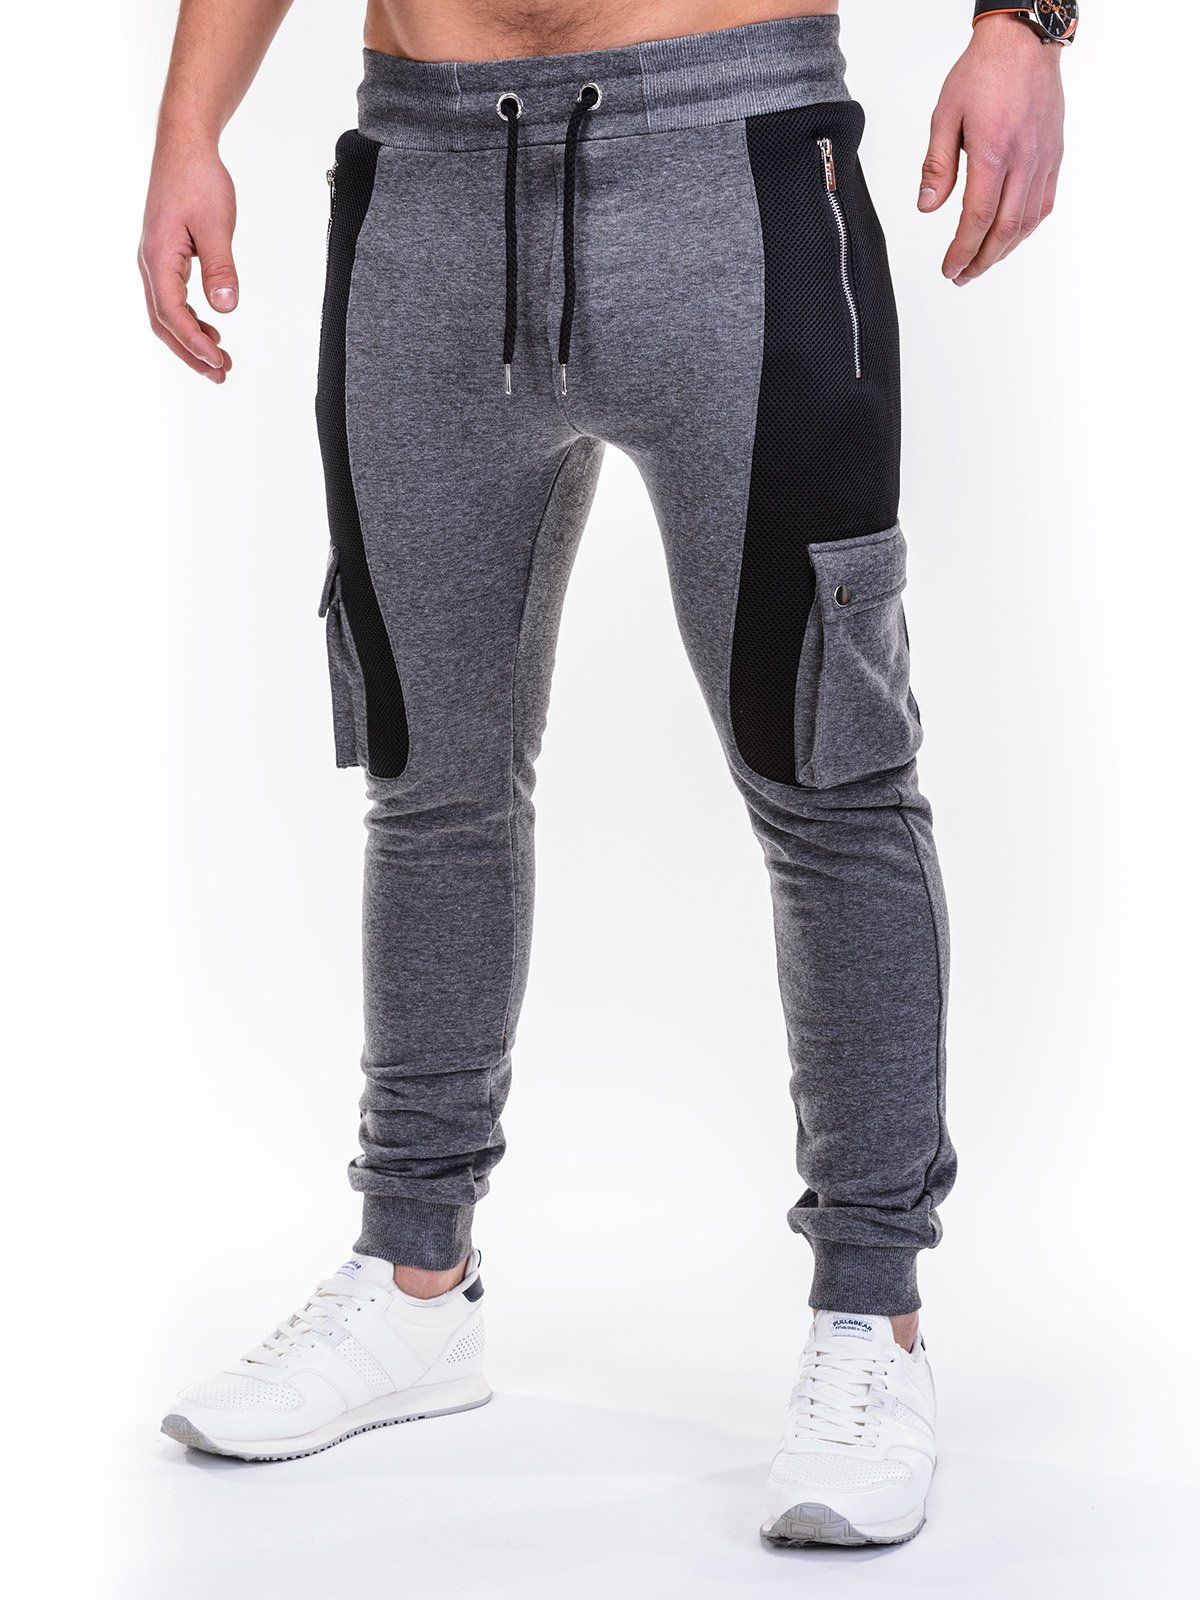 Men's sweatpants P424 - dark grey | MODONE wholesale - Clothing For Men